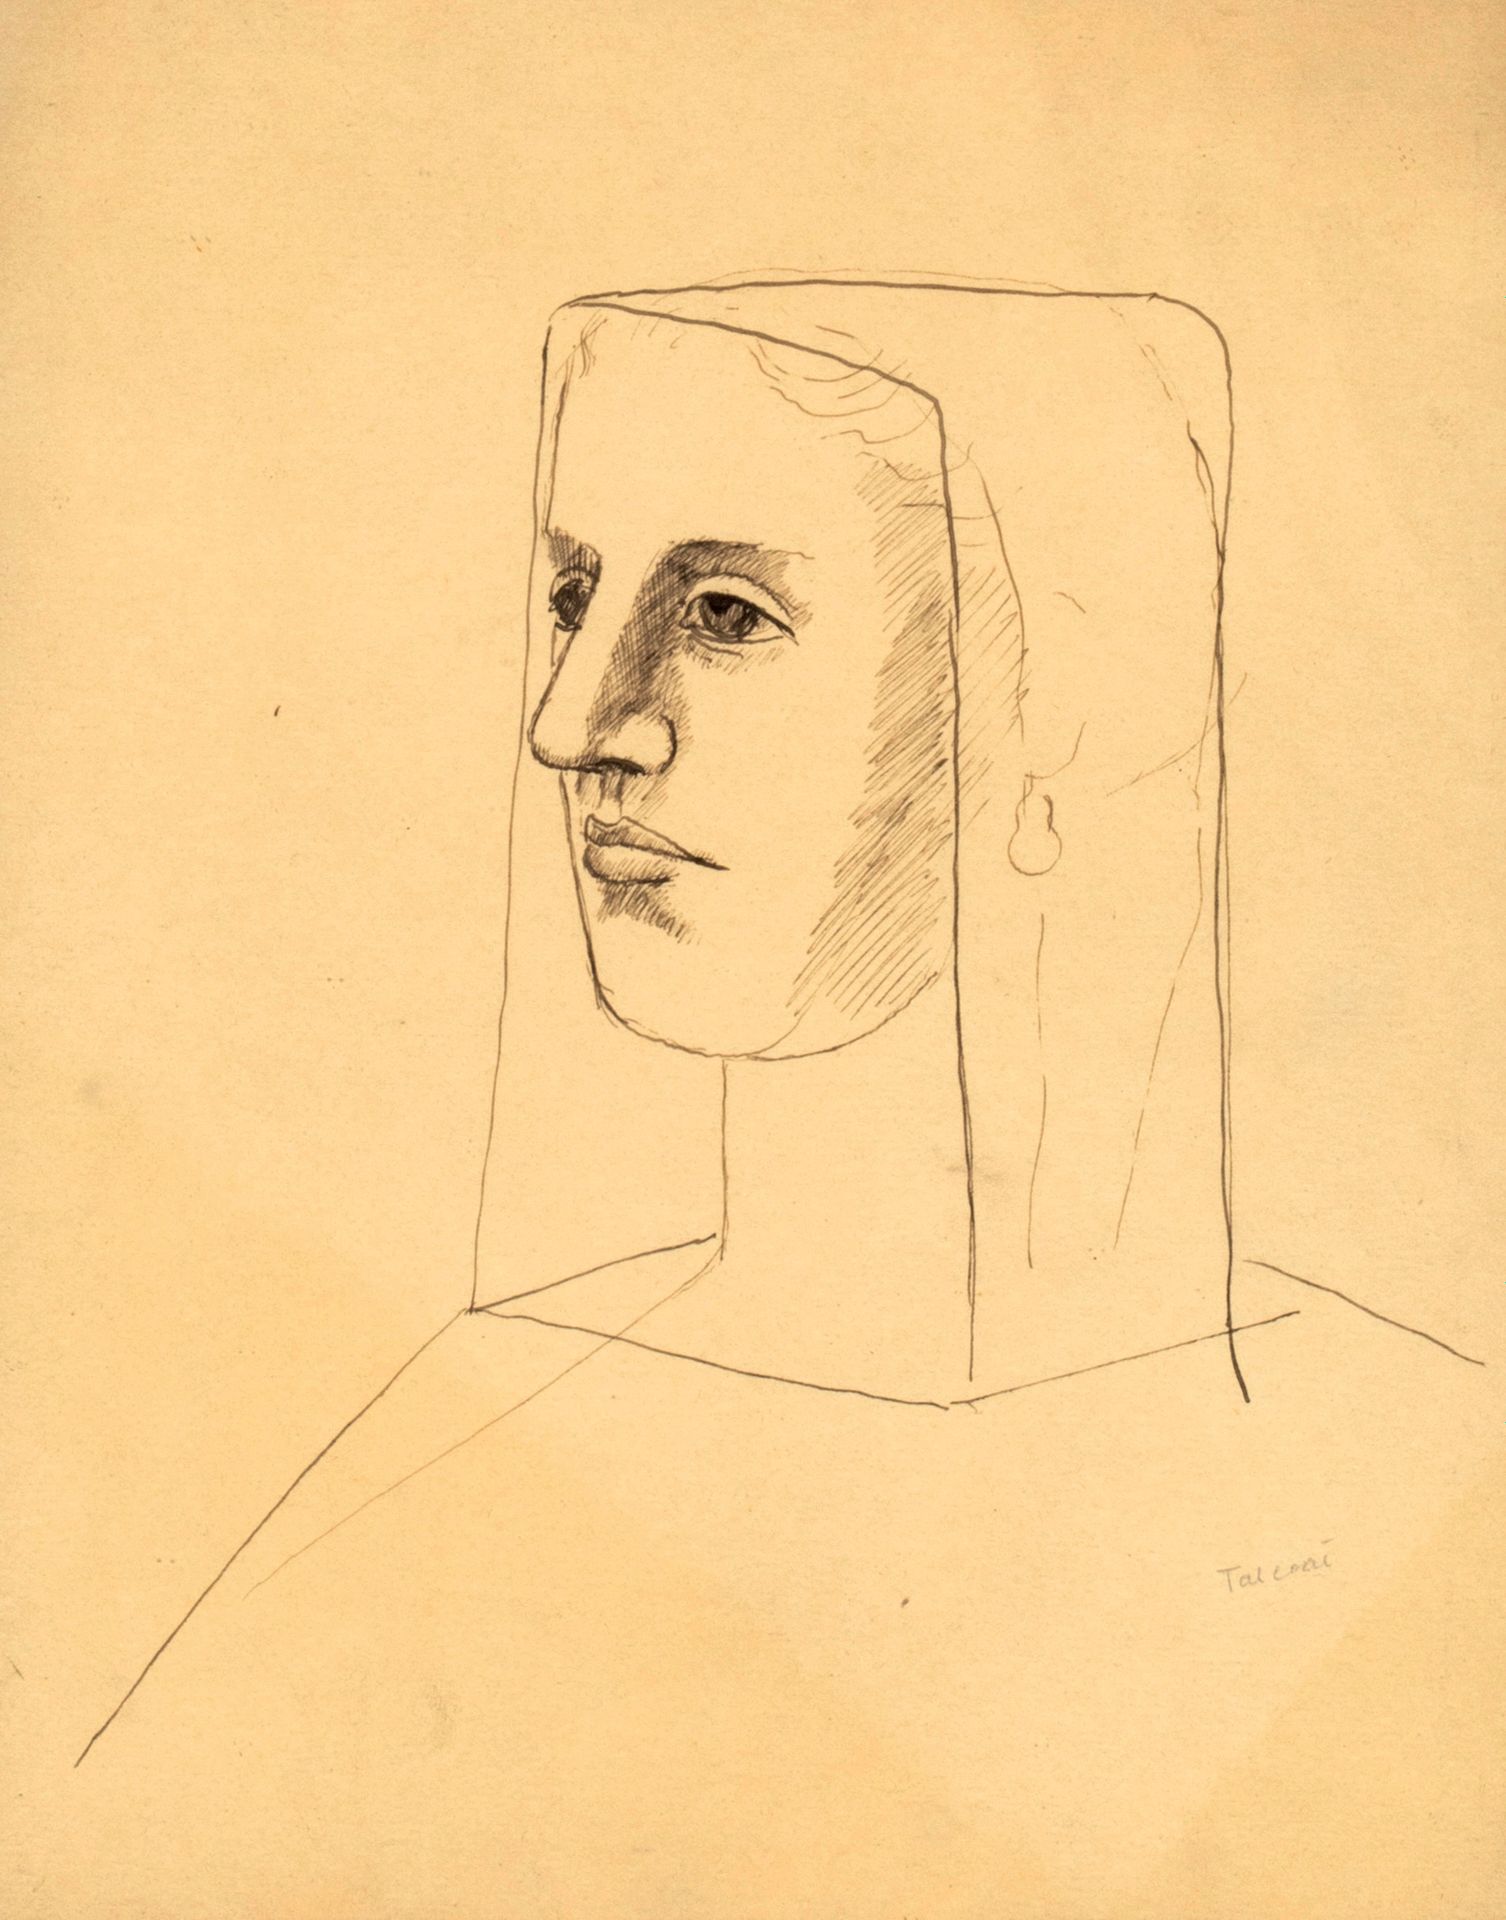 PIERRE TAL COAT (1905-1985) 纸上水墨女人肖像，右下角有签名，有框架 26 x 20.5 cm (正在观看)